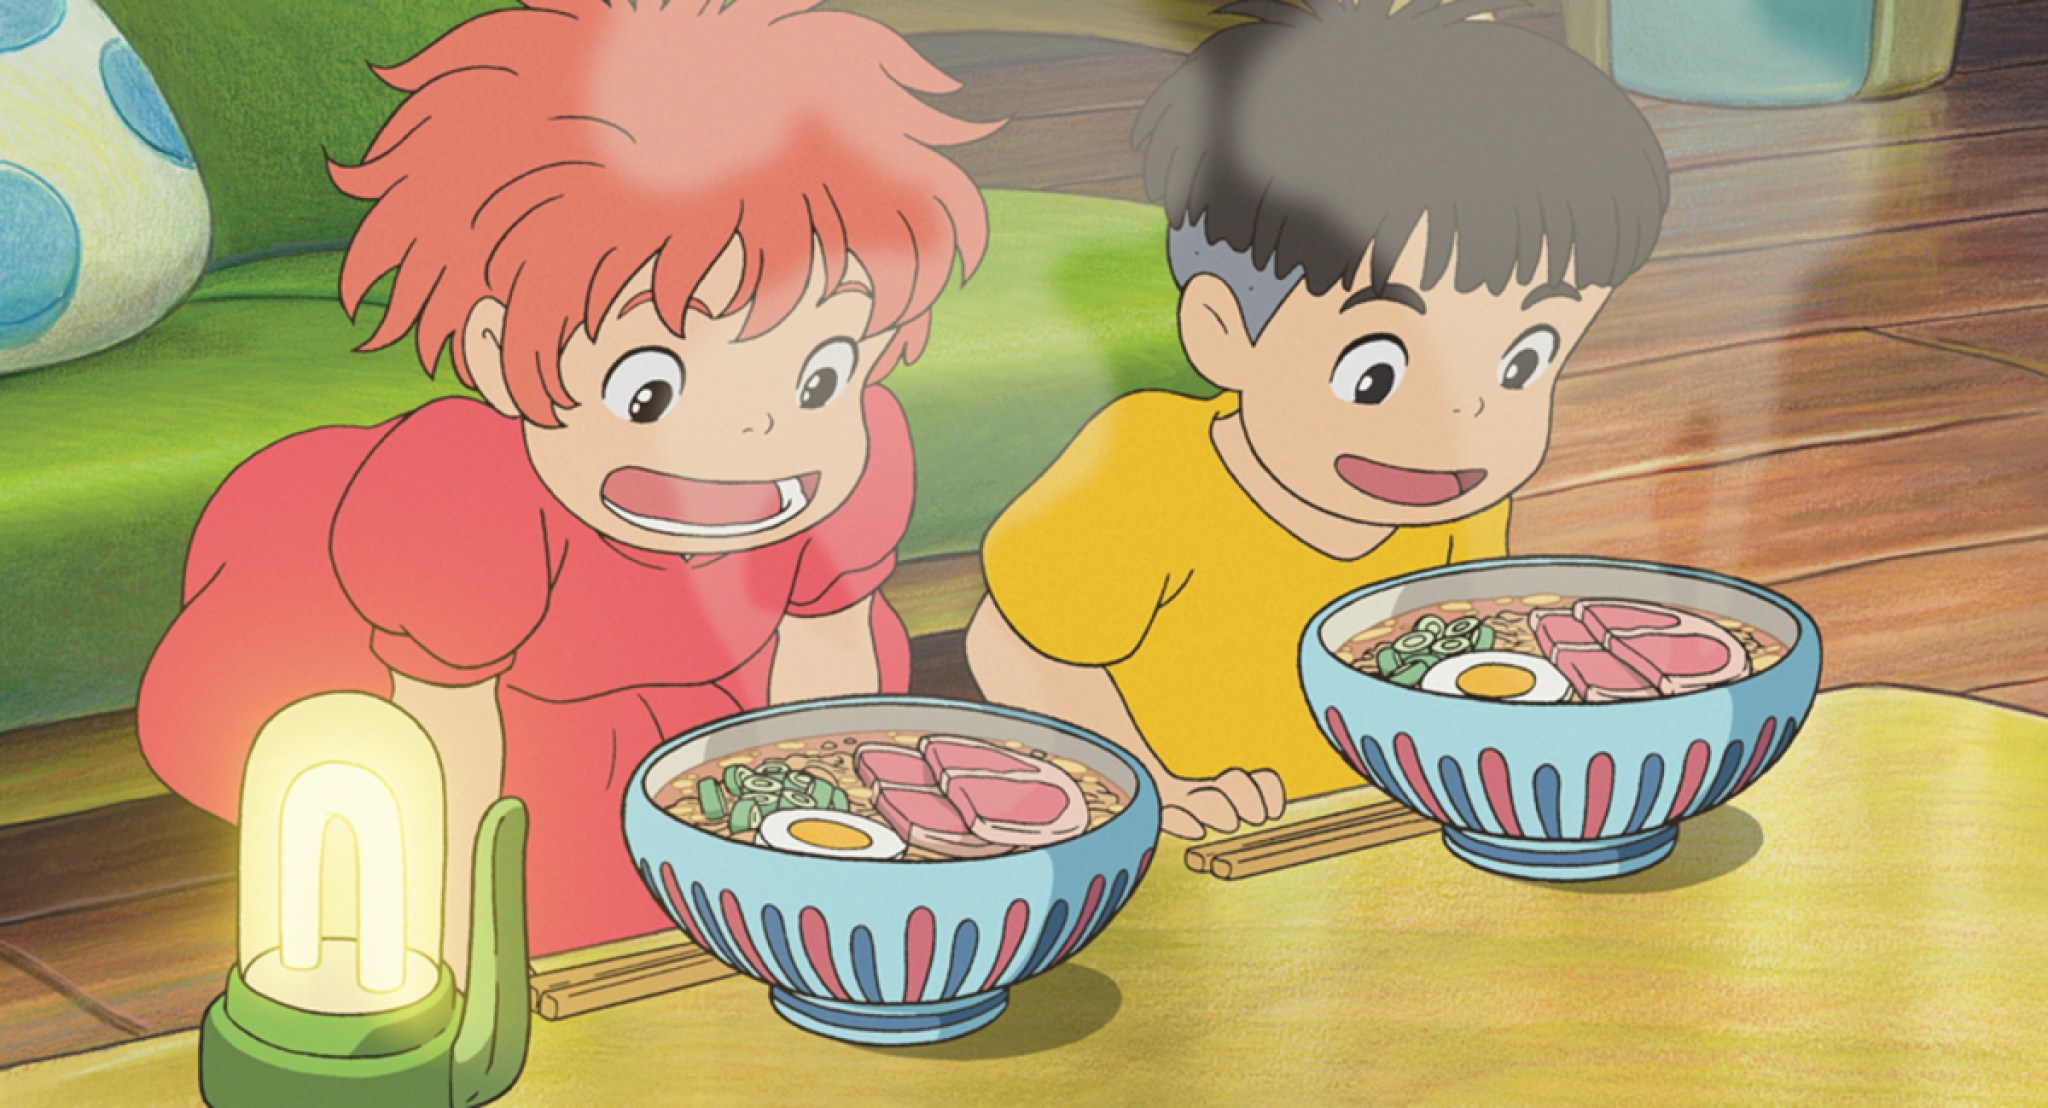 Ponyo and Sosuke having a steaming hot bowl of ramen